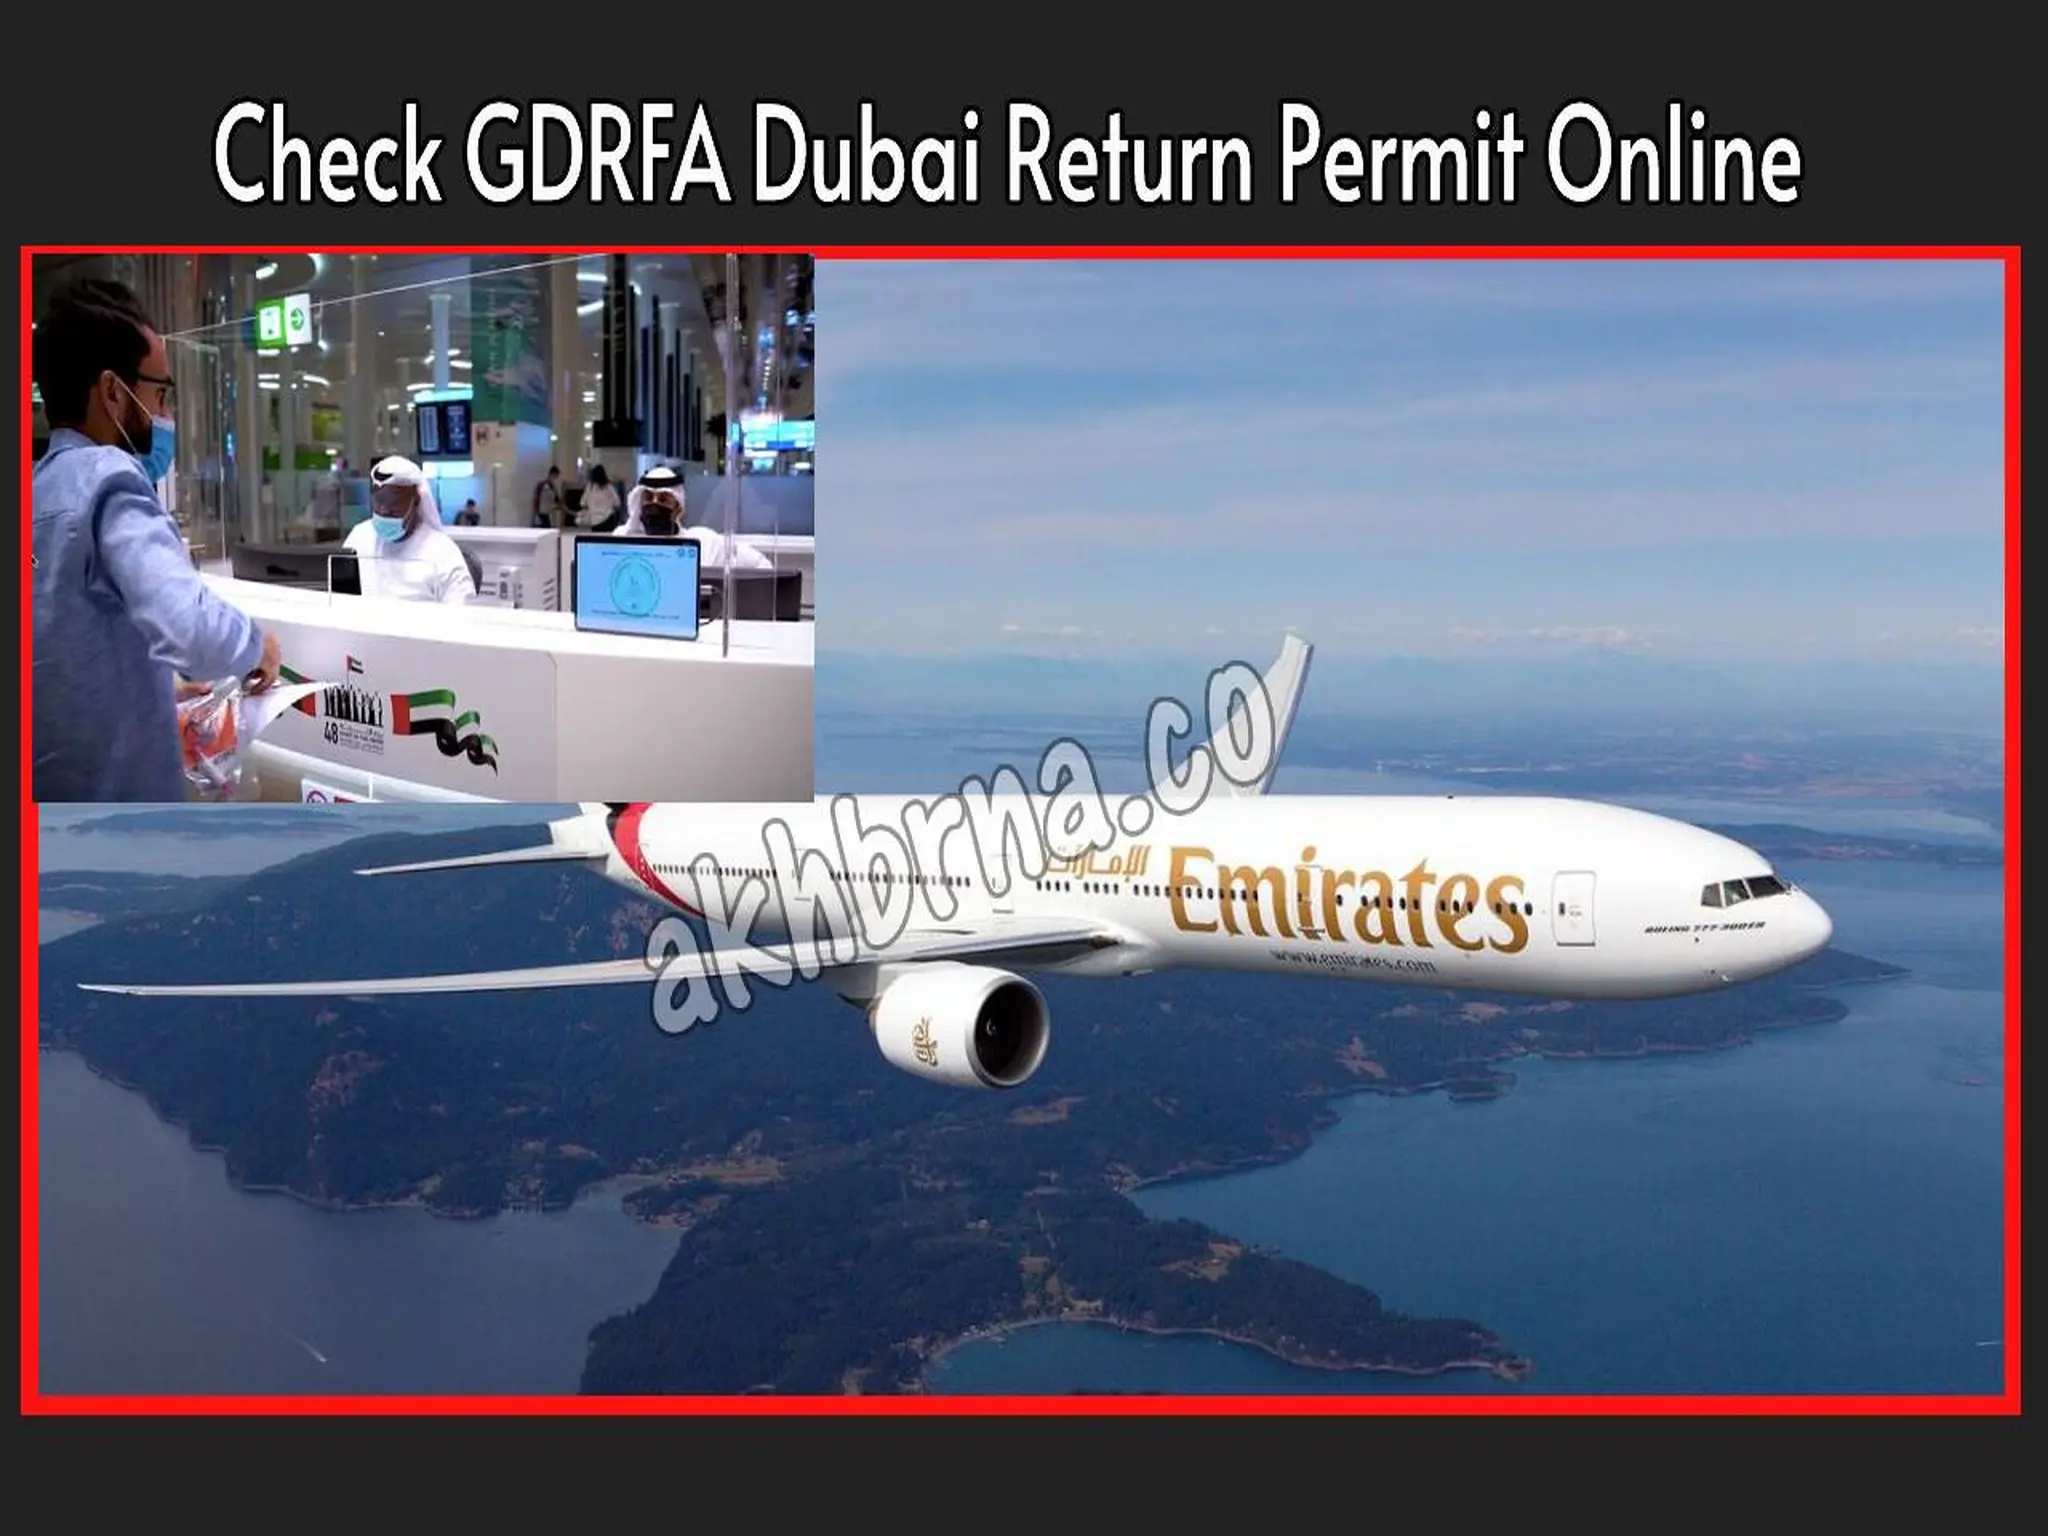 How to Check Application Status of GDRFA Dubai Return Permit Online?